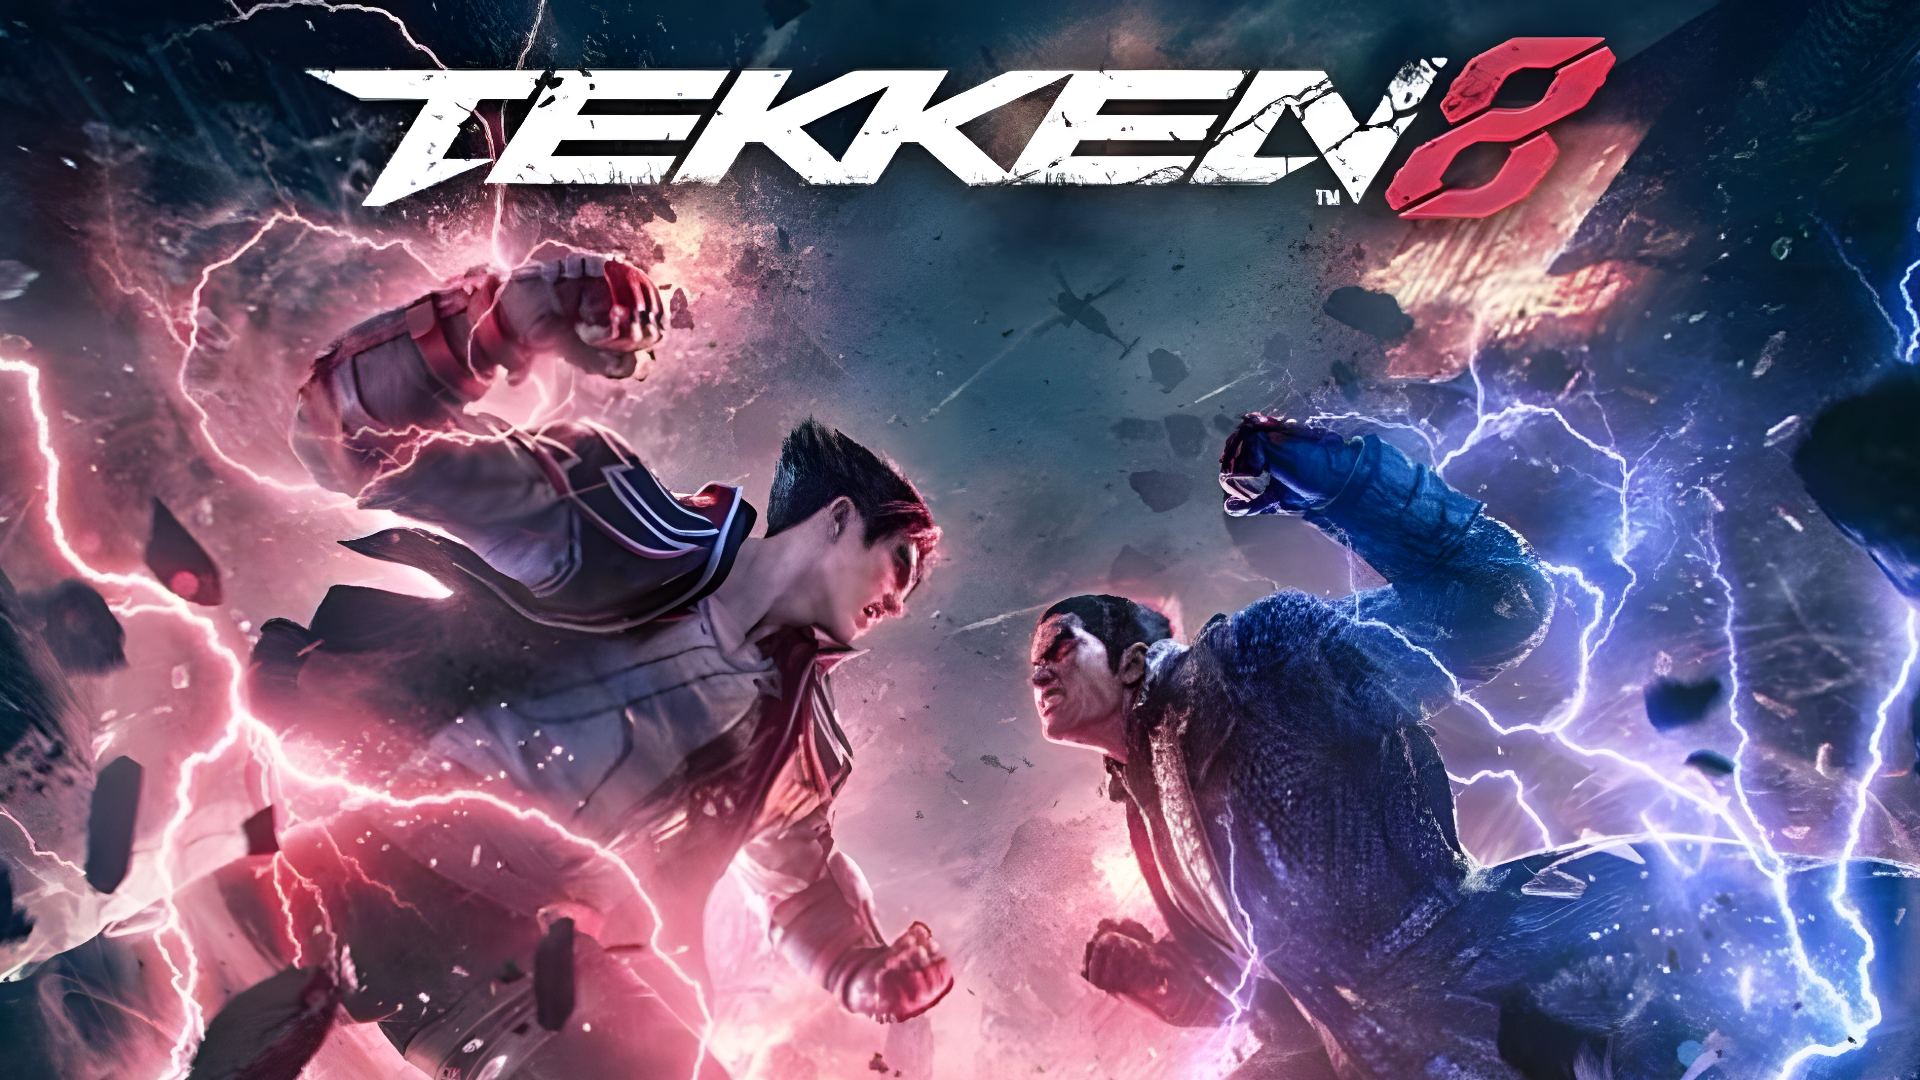 Tekken 8 gets a CBT this October! - Impulse Gamer